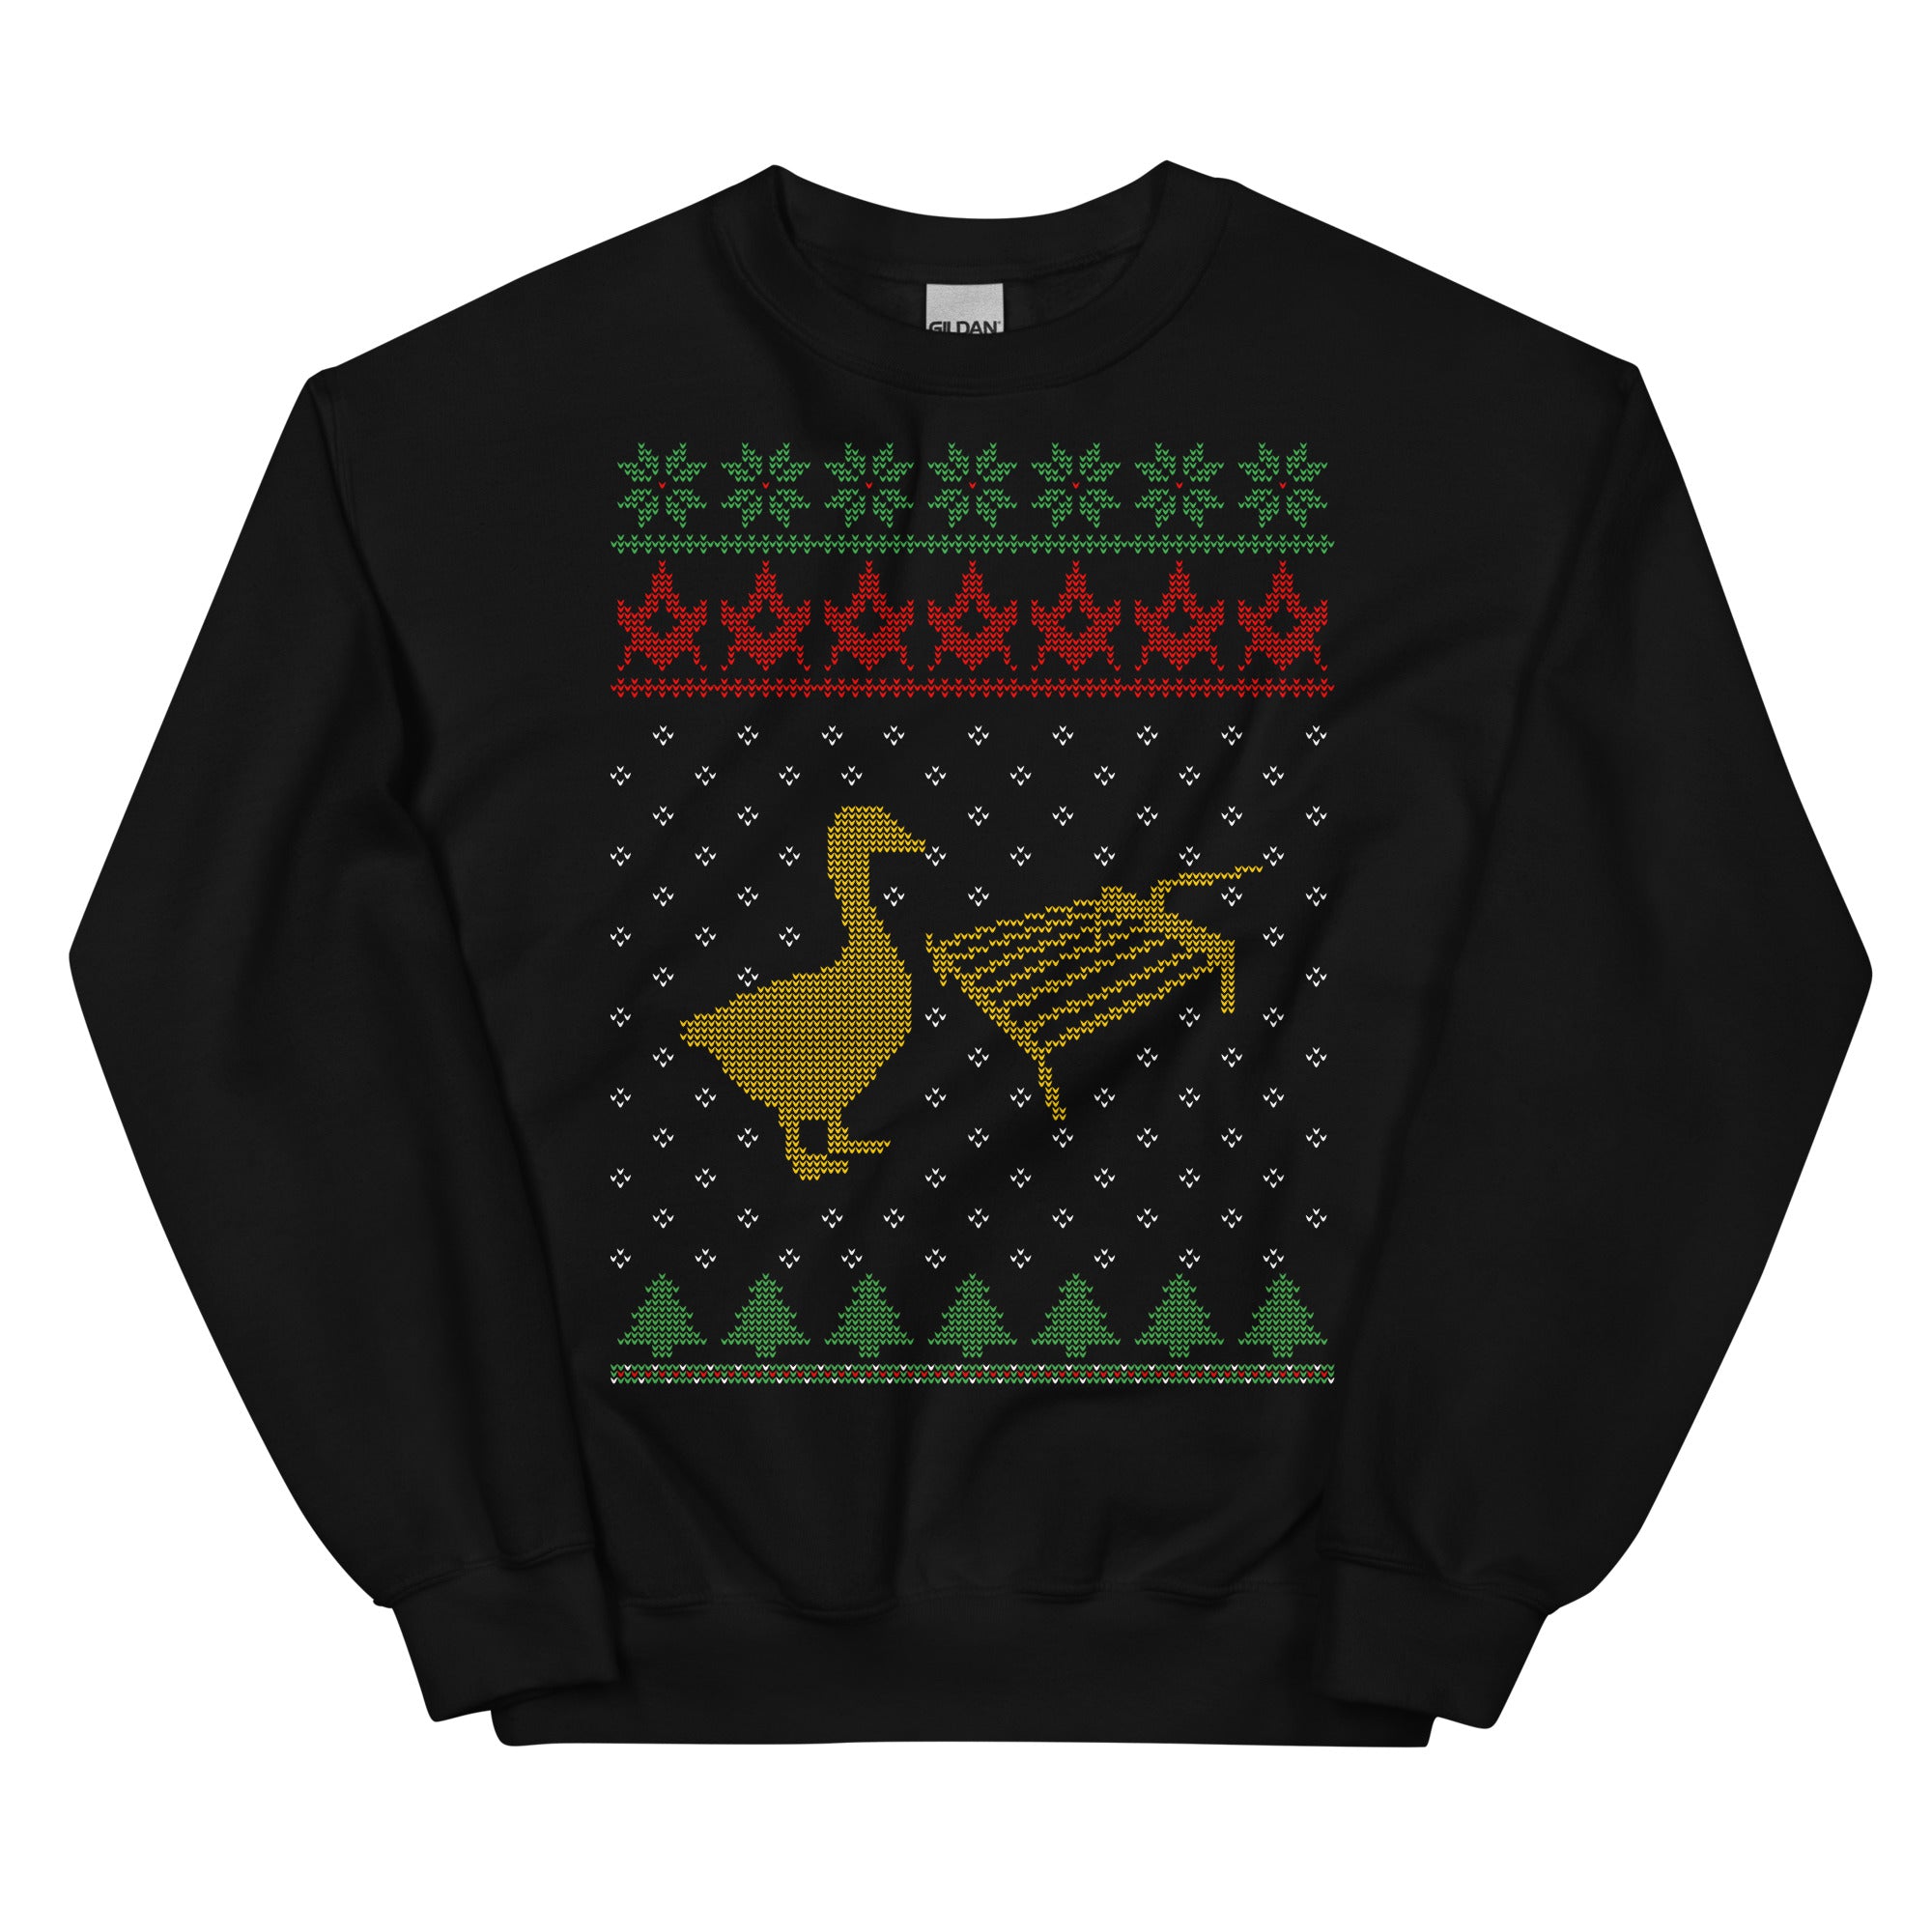 Goose and Gridiron Christmas Sweater 2